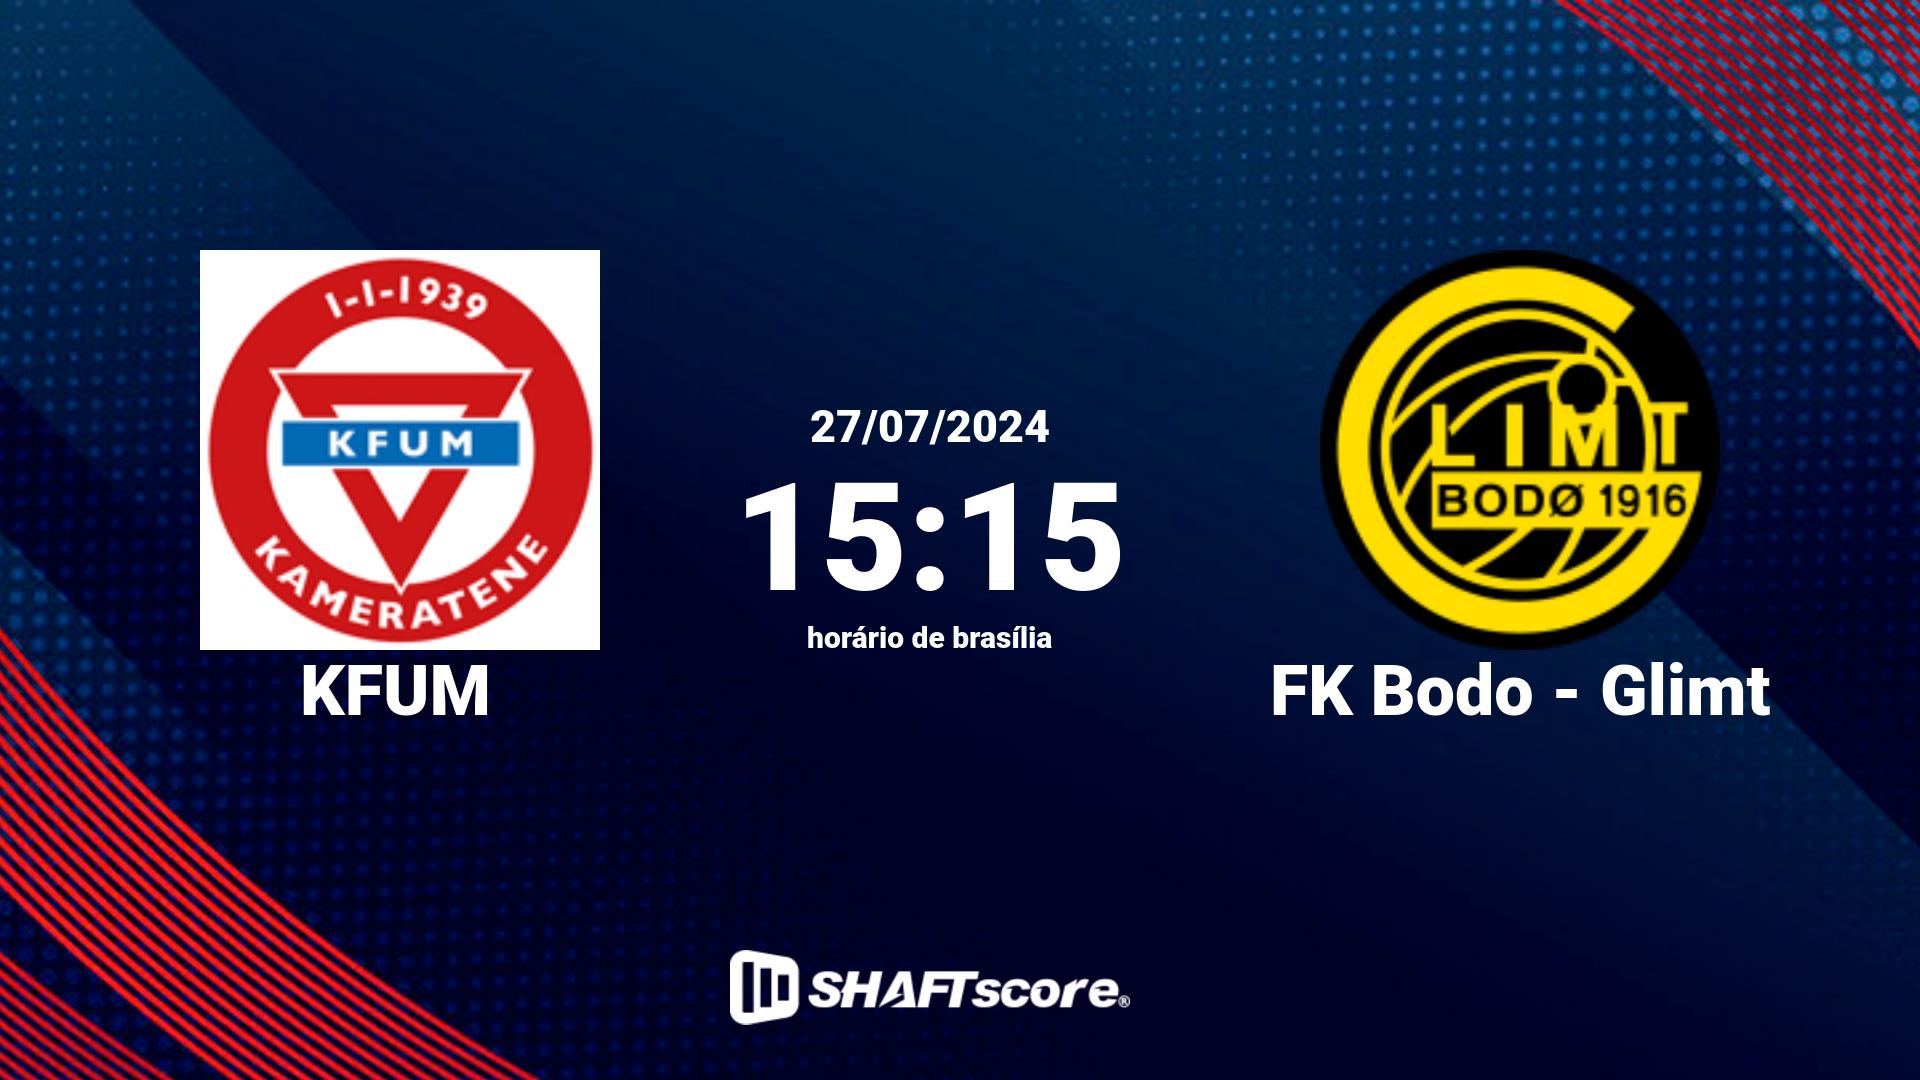 Estatísticas do jogo KFUM vs FK Bodo - Glimt 27.07 15:15